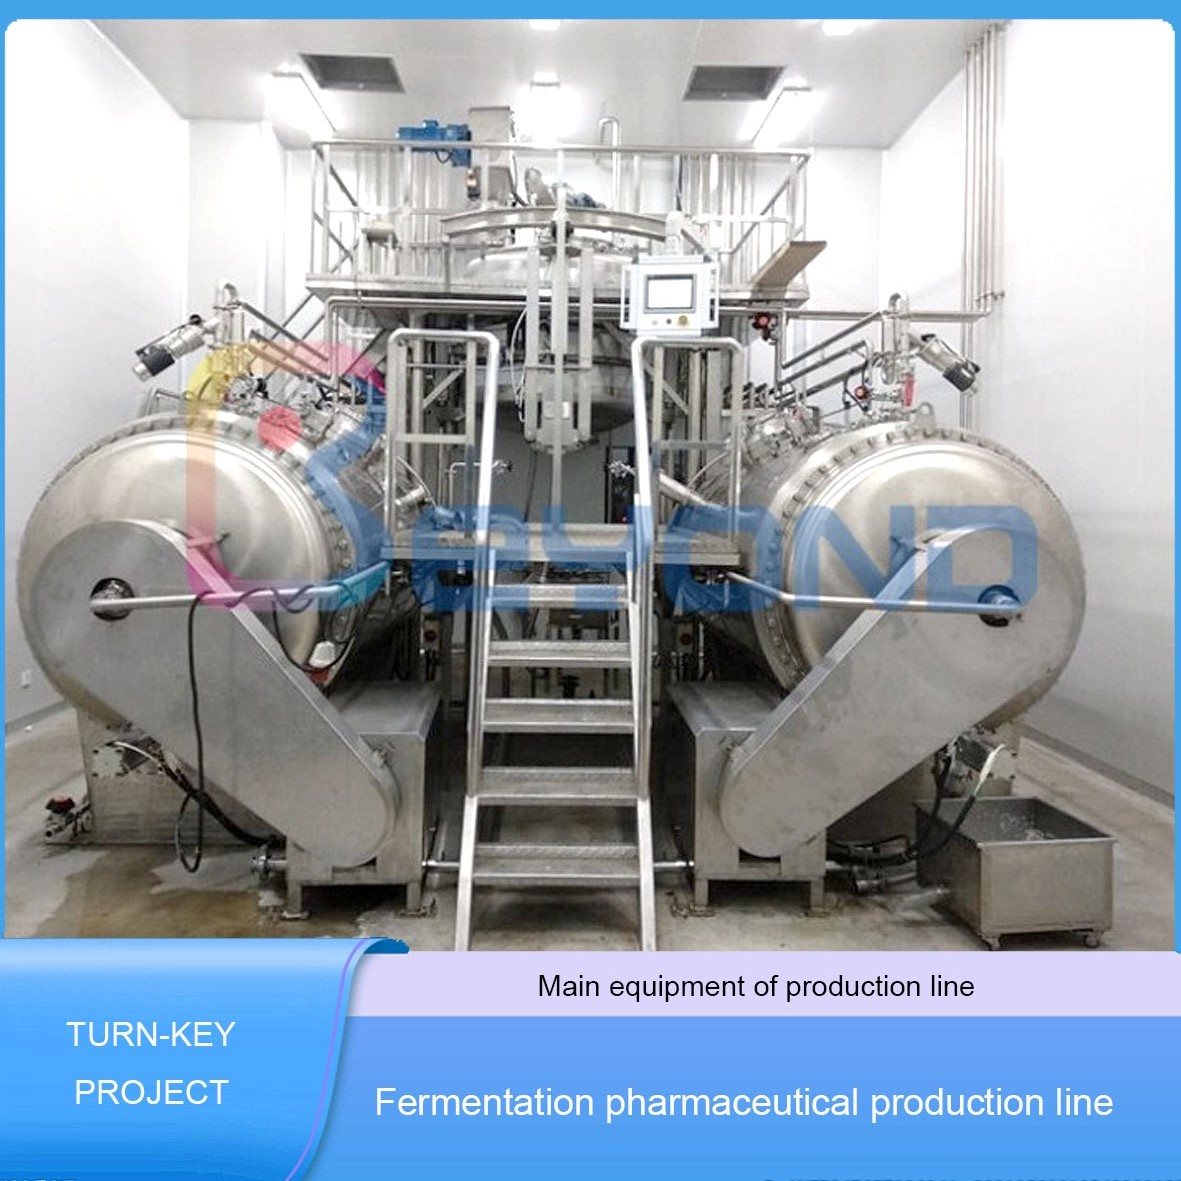 Fermentation pharmaceutical production line